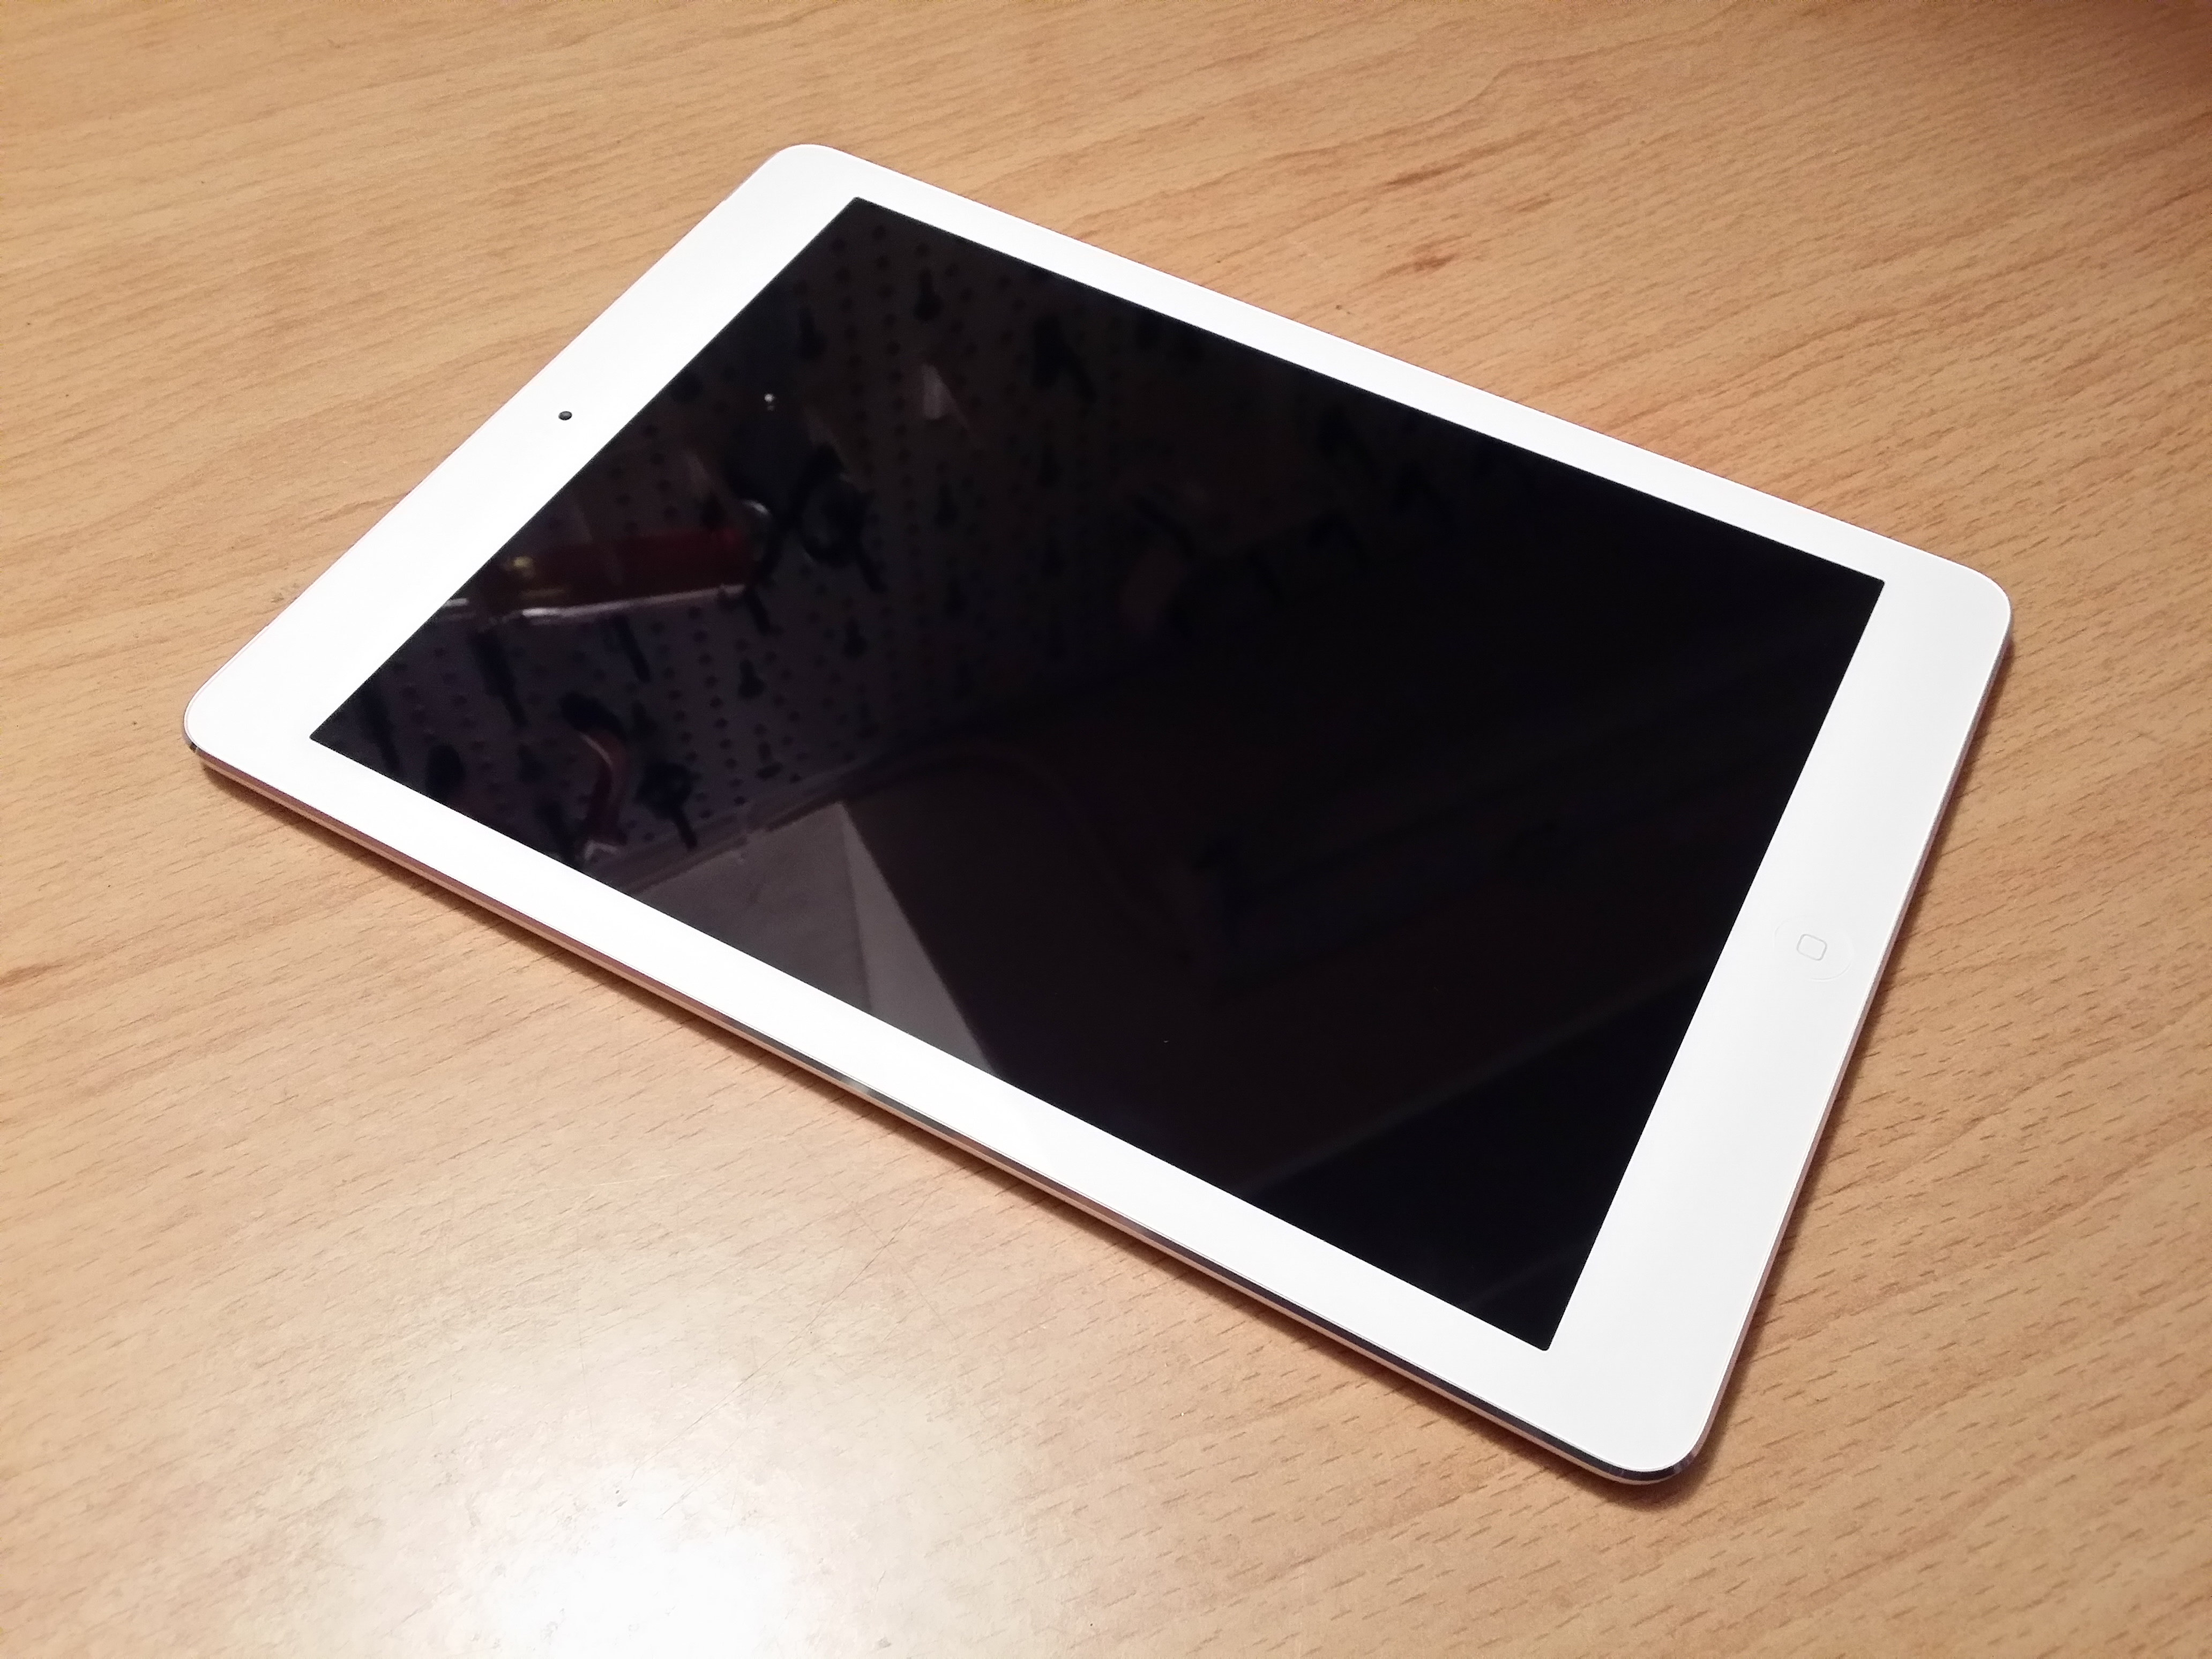 Apple iPad Air hands-on review: Το “αέρινο” iPad